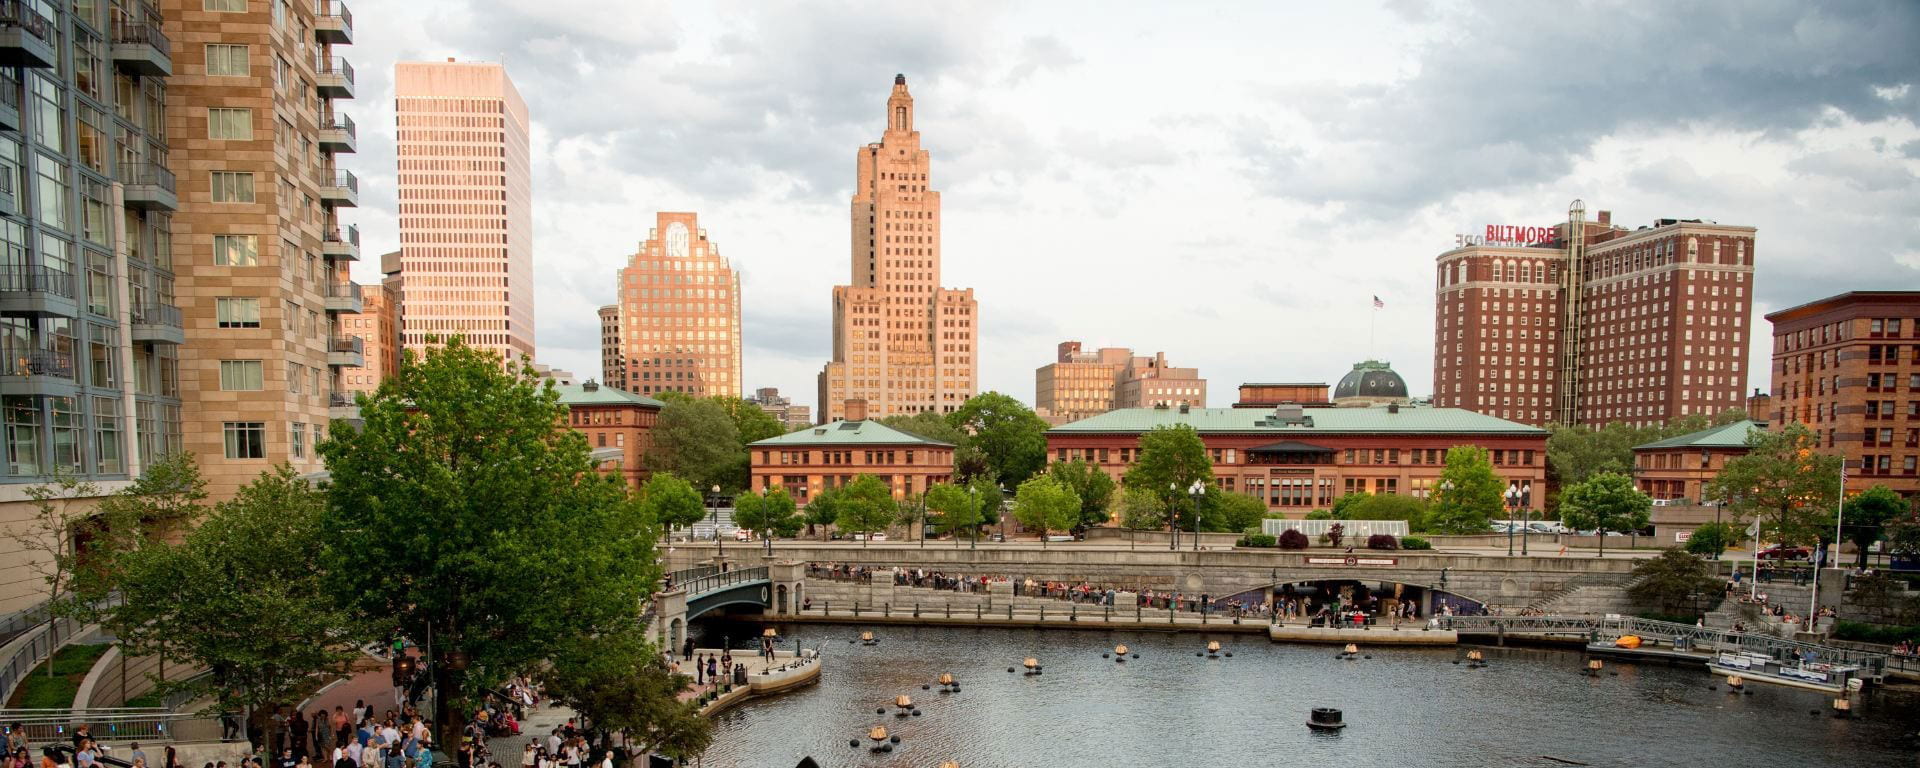 Skyline image of the city of Providence